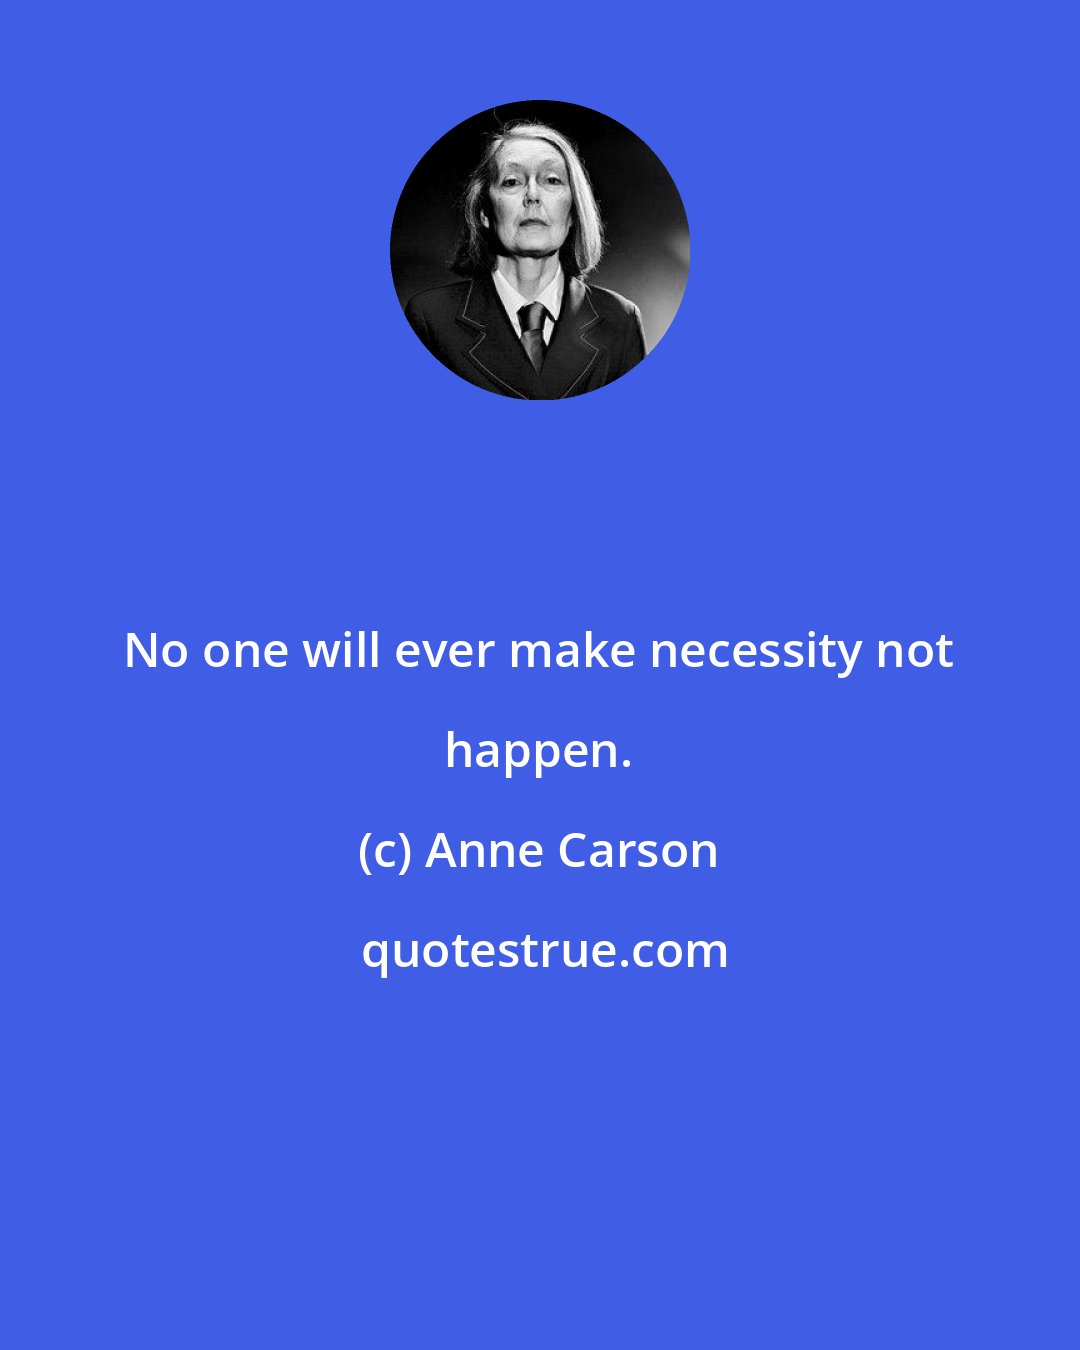 Anne Carson: No one will ever make necessity not happen.